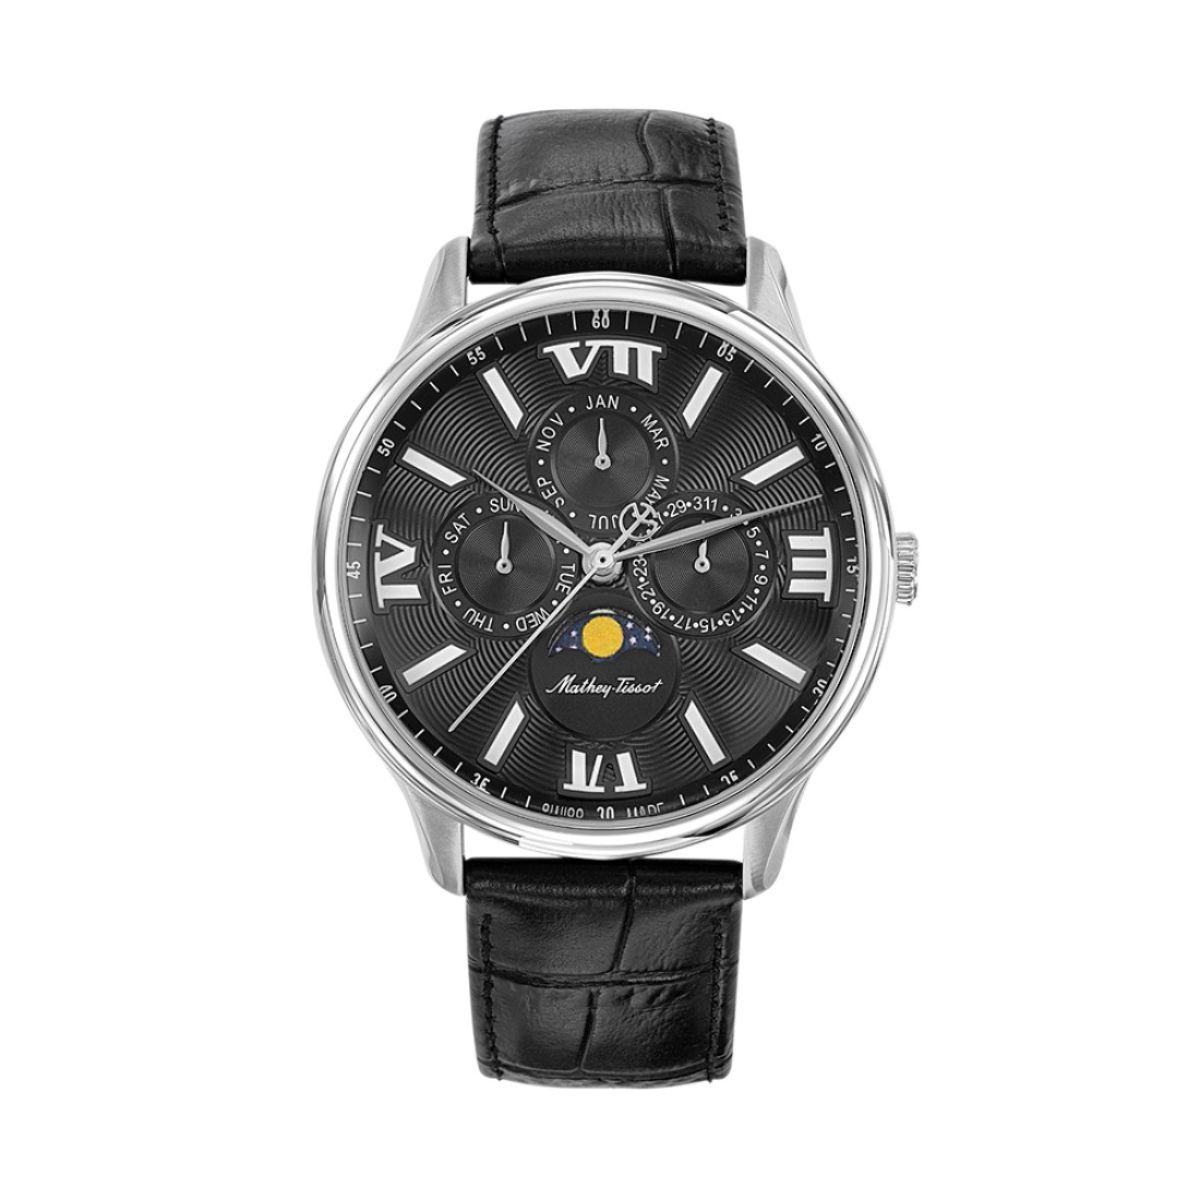 Mathey-Tissot Black Dial Chronograph Watches For Men - H1886RAN